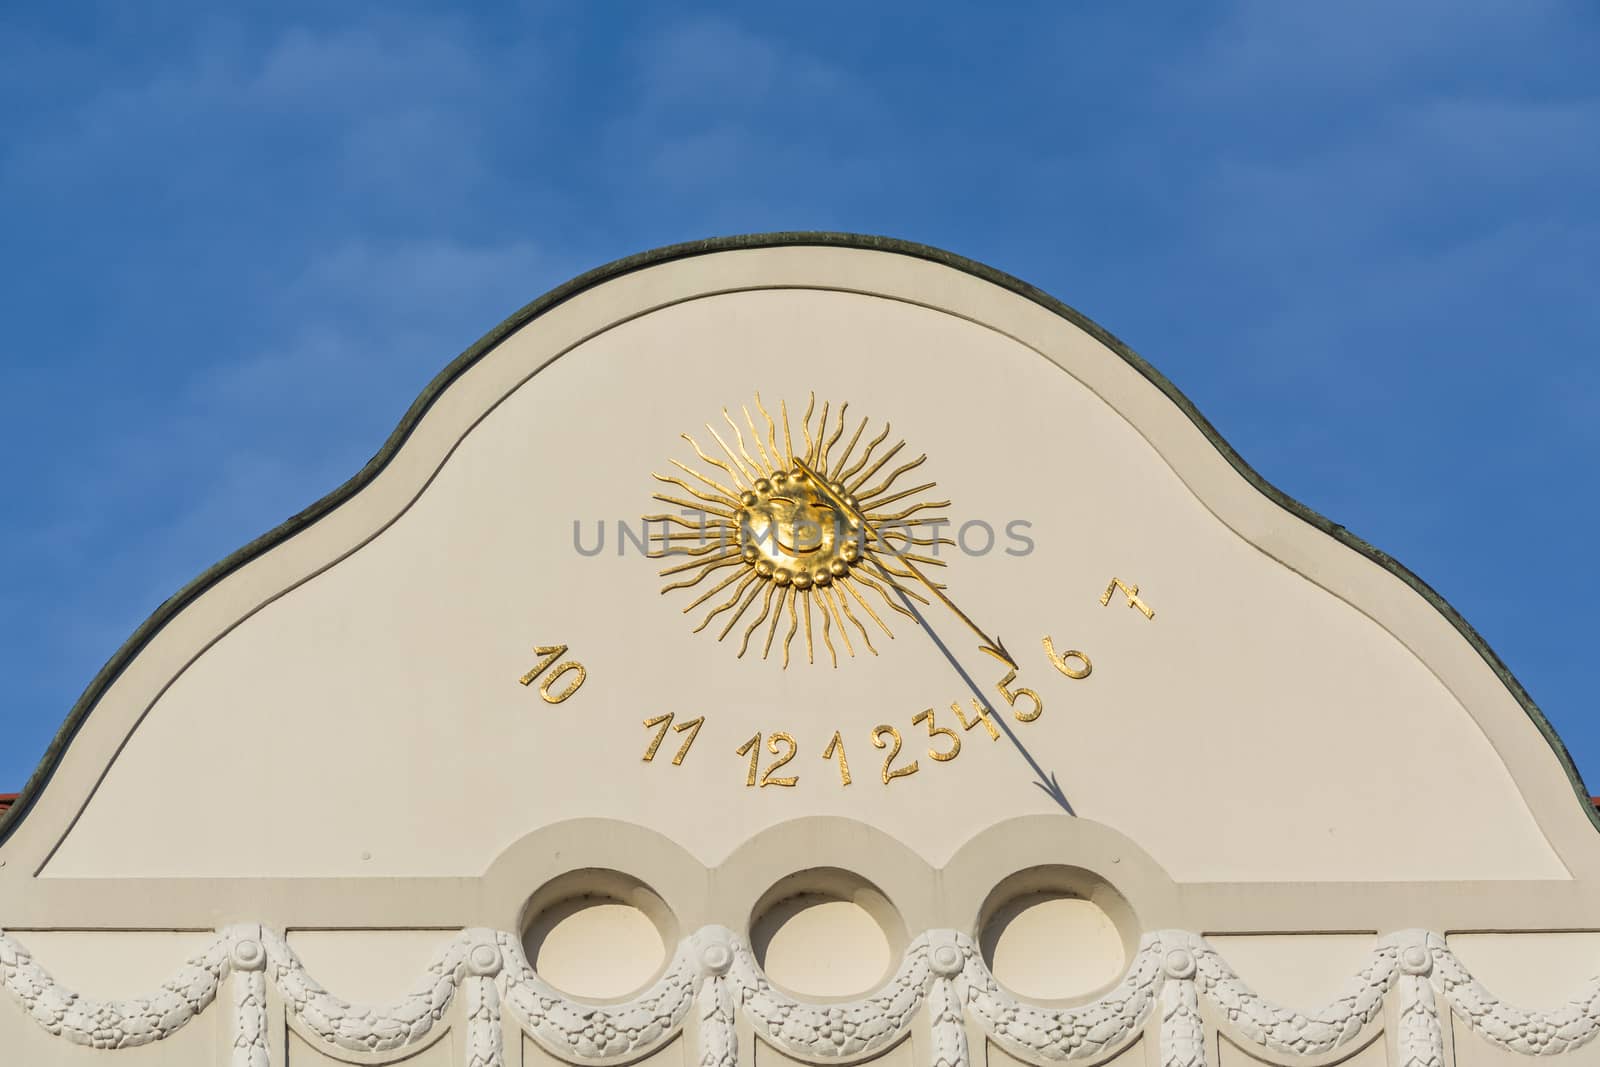  Sundial clock on a house facade by JFsPic